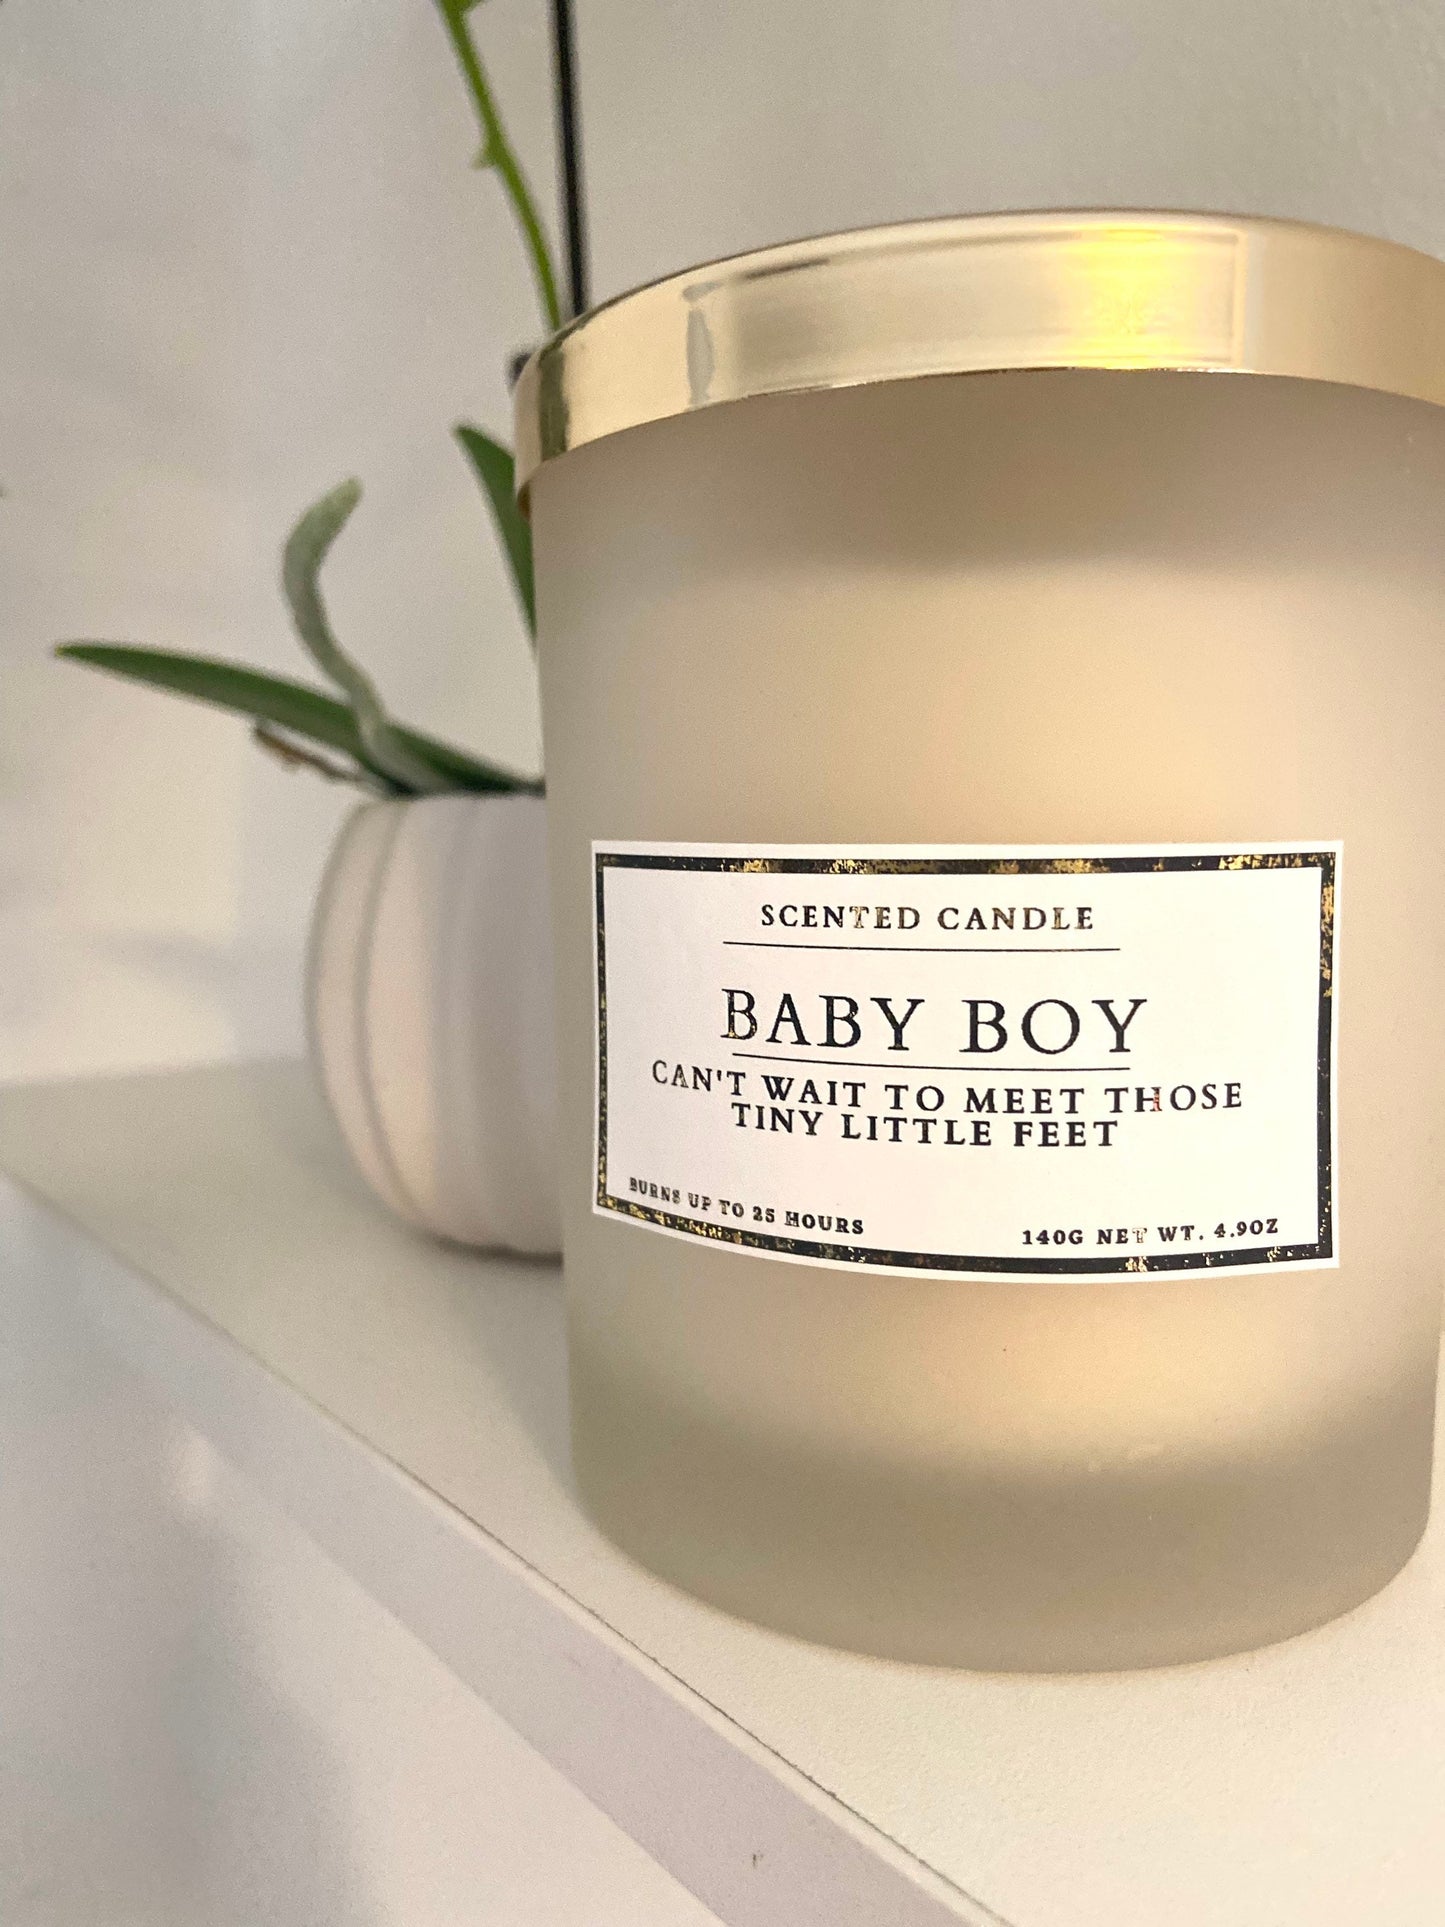 New Mum Baby Boy Candle